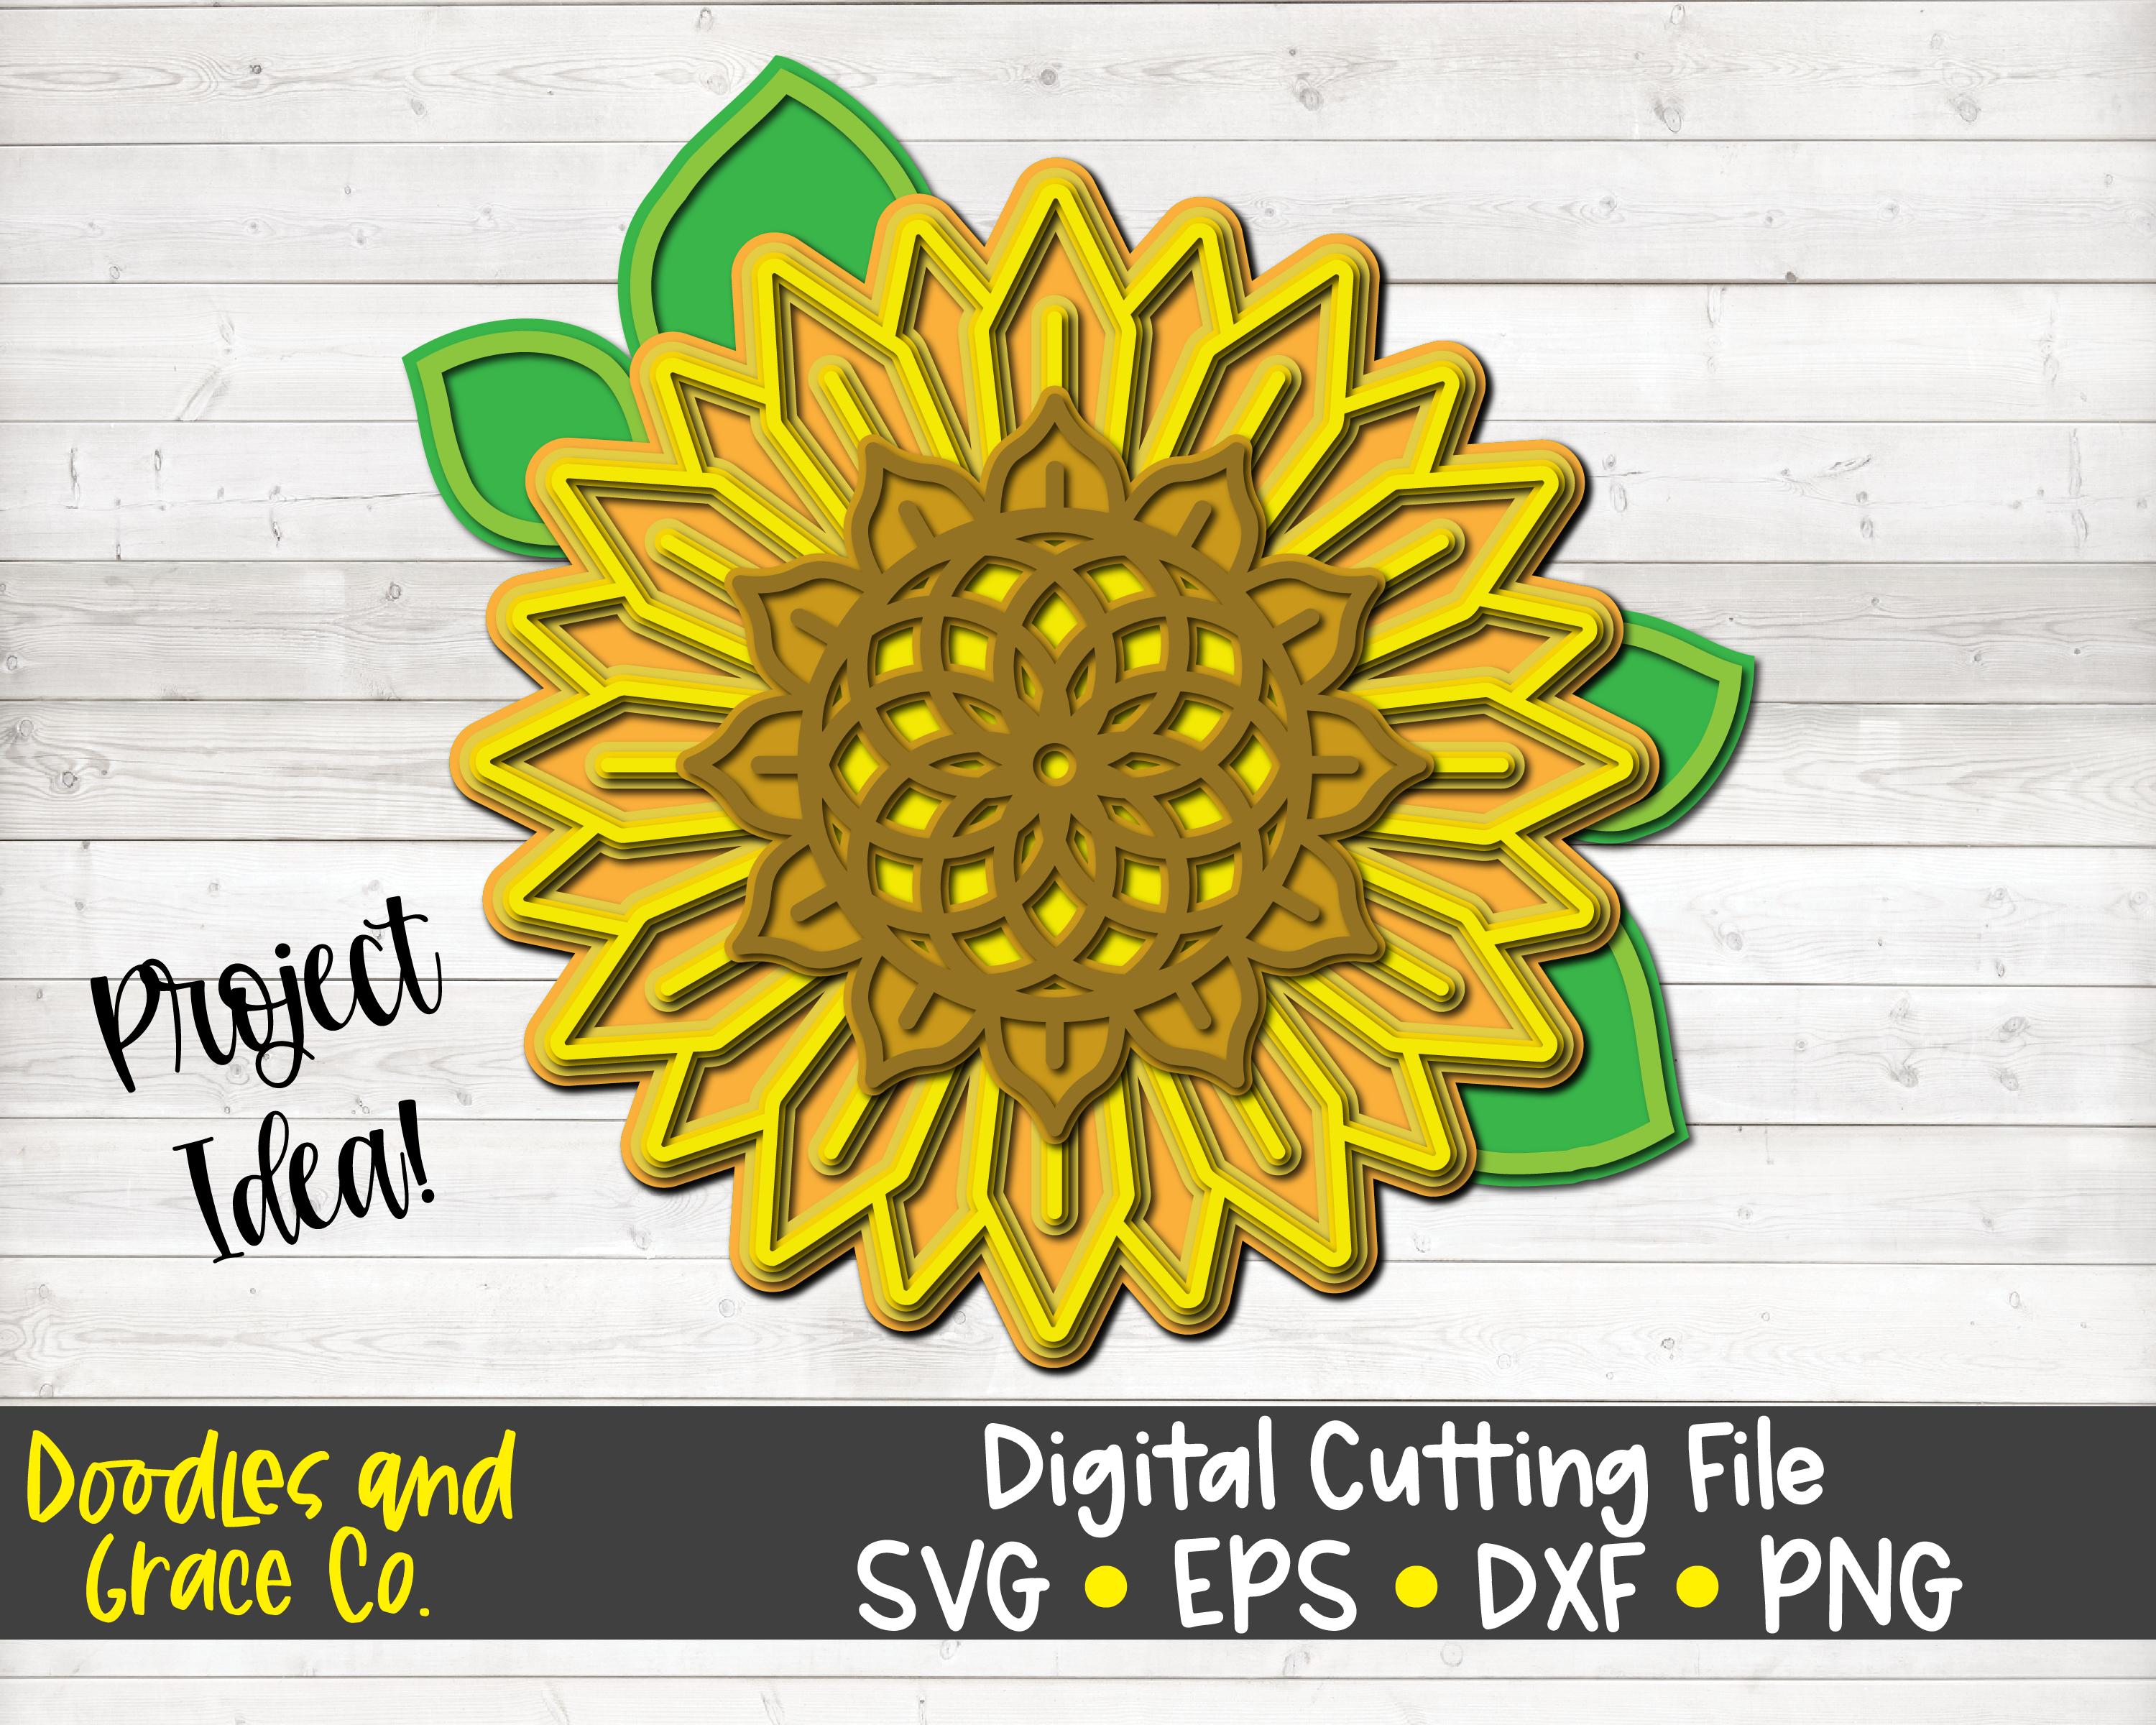 Free Free 233 3D Layered Mandala Svg SVG PNG EPS DXF File